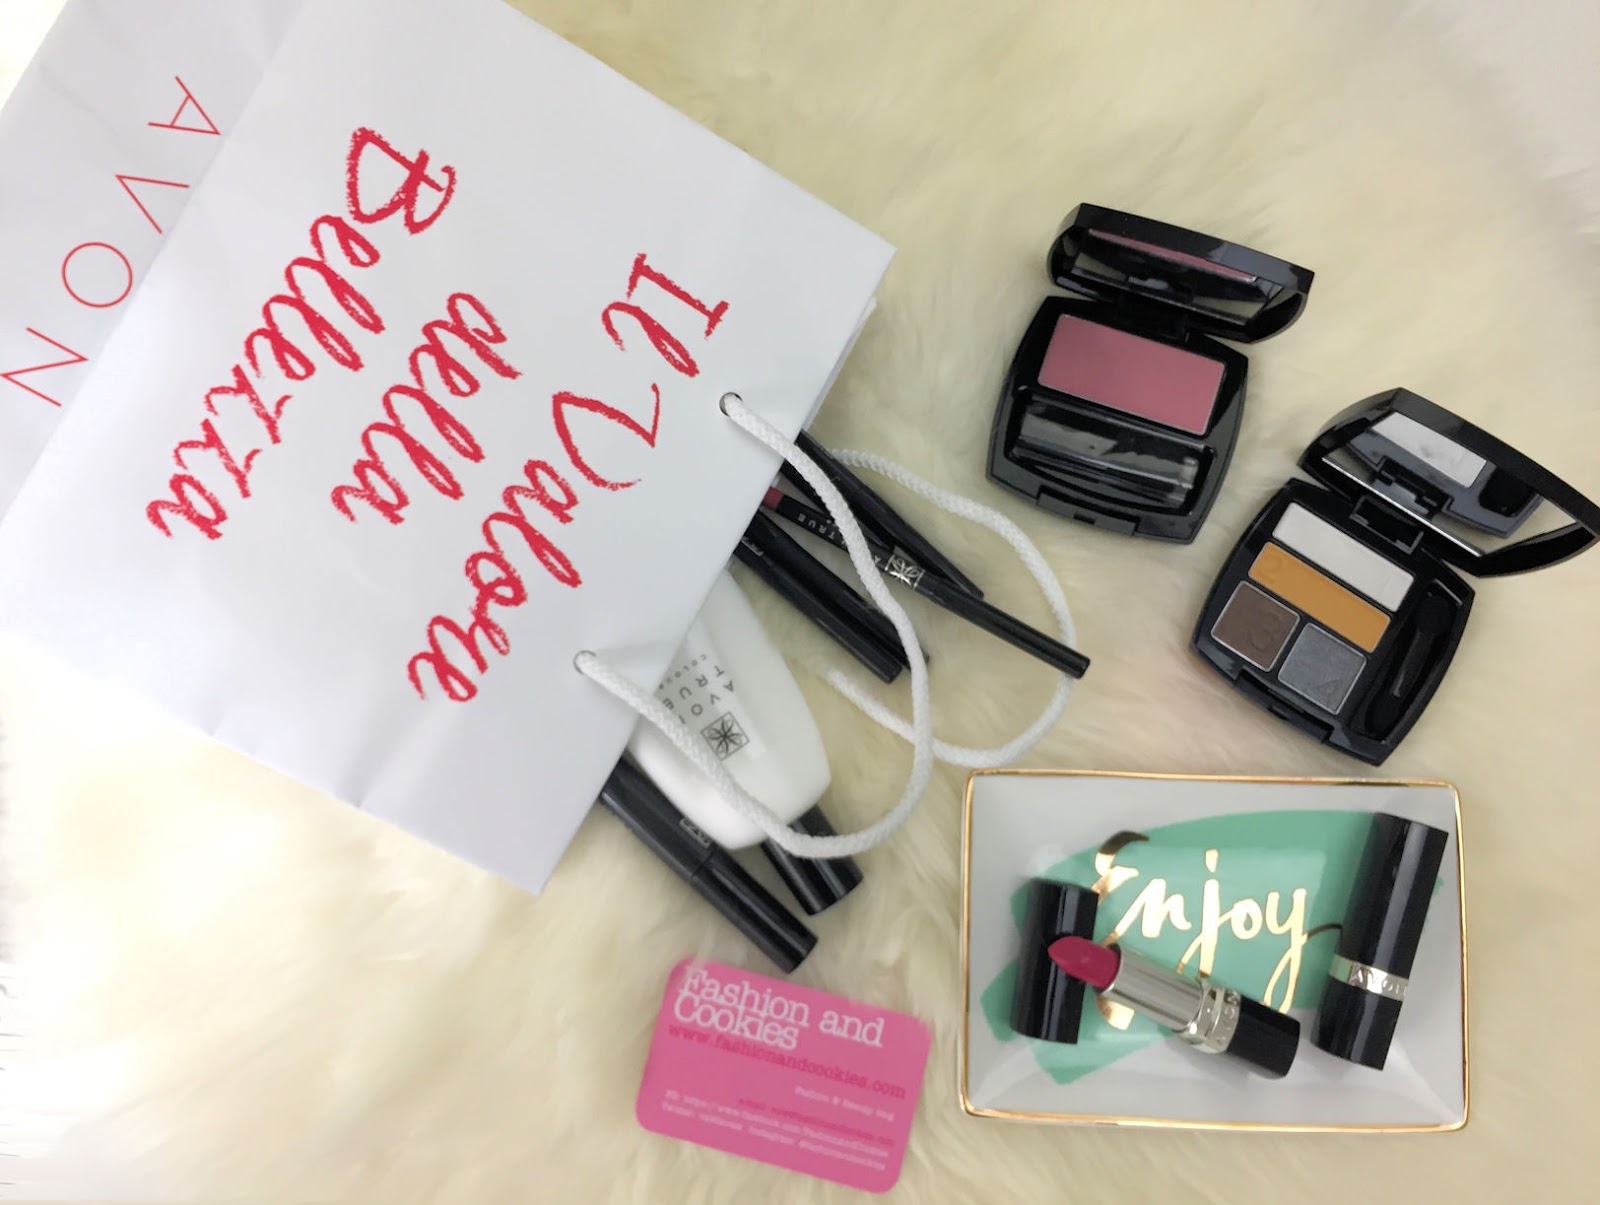 Avon #allascopertadiavon collezione makeup True Colour su Fashion and Cookies beauty blog, beauty blogger